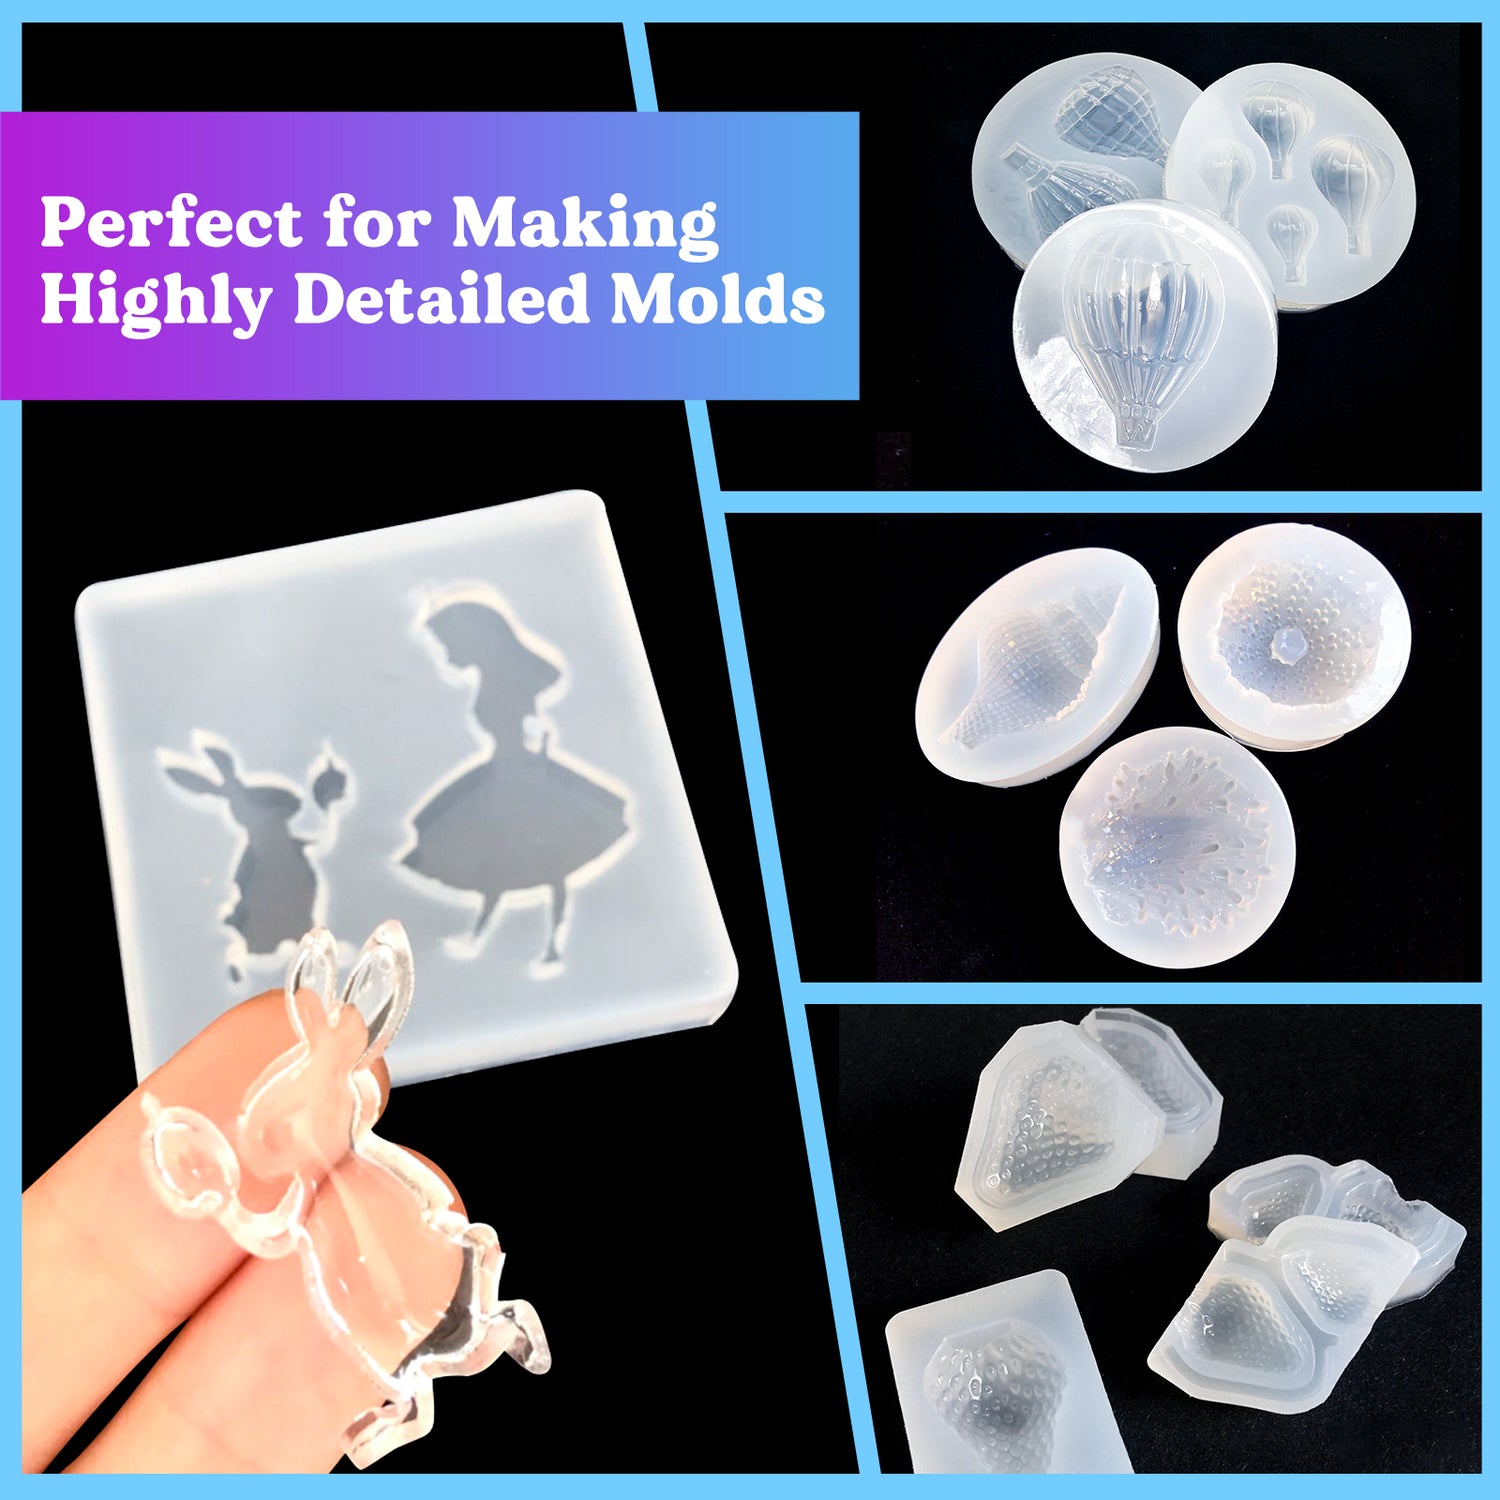 Silicone Mold Making Kit Liquid Silicone Rubber Non-Toxic Translucent Clear  Mold